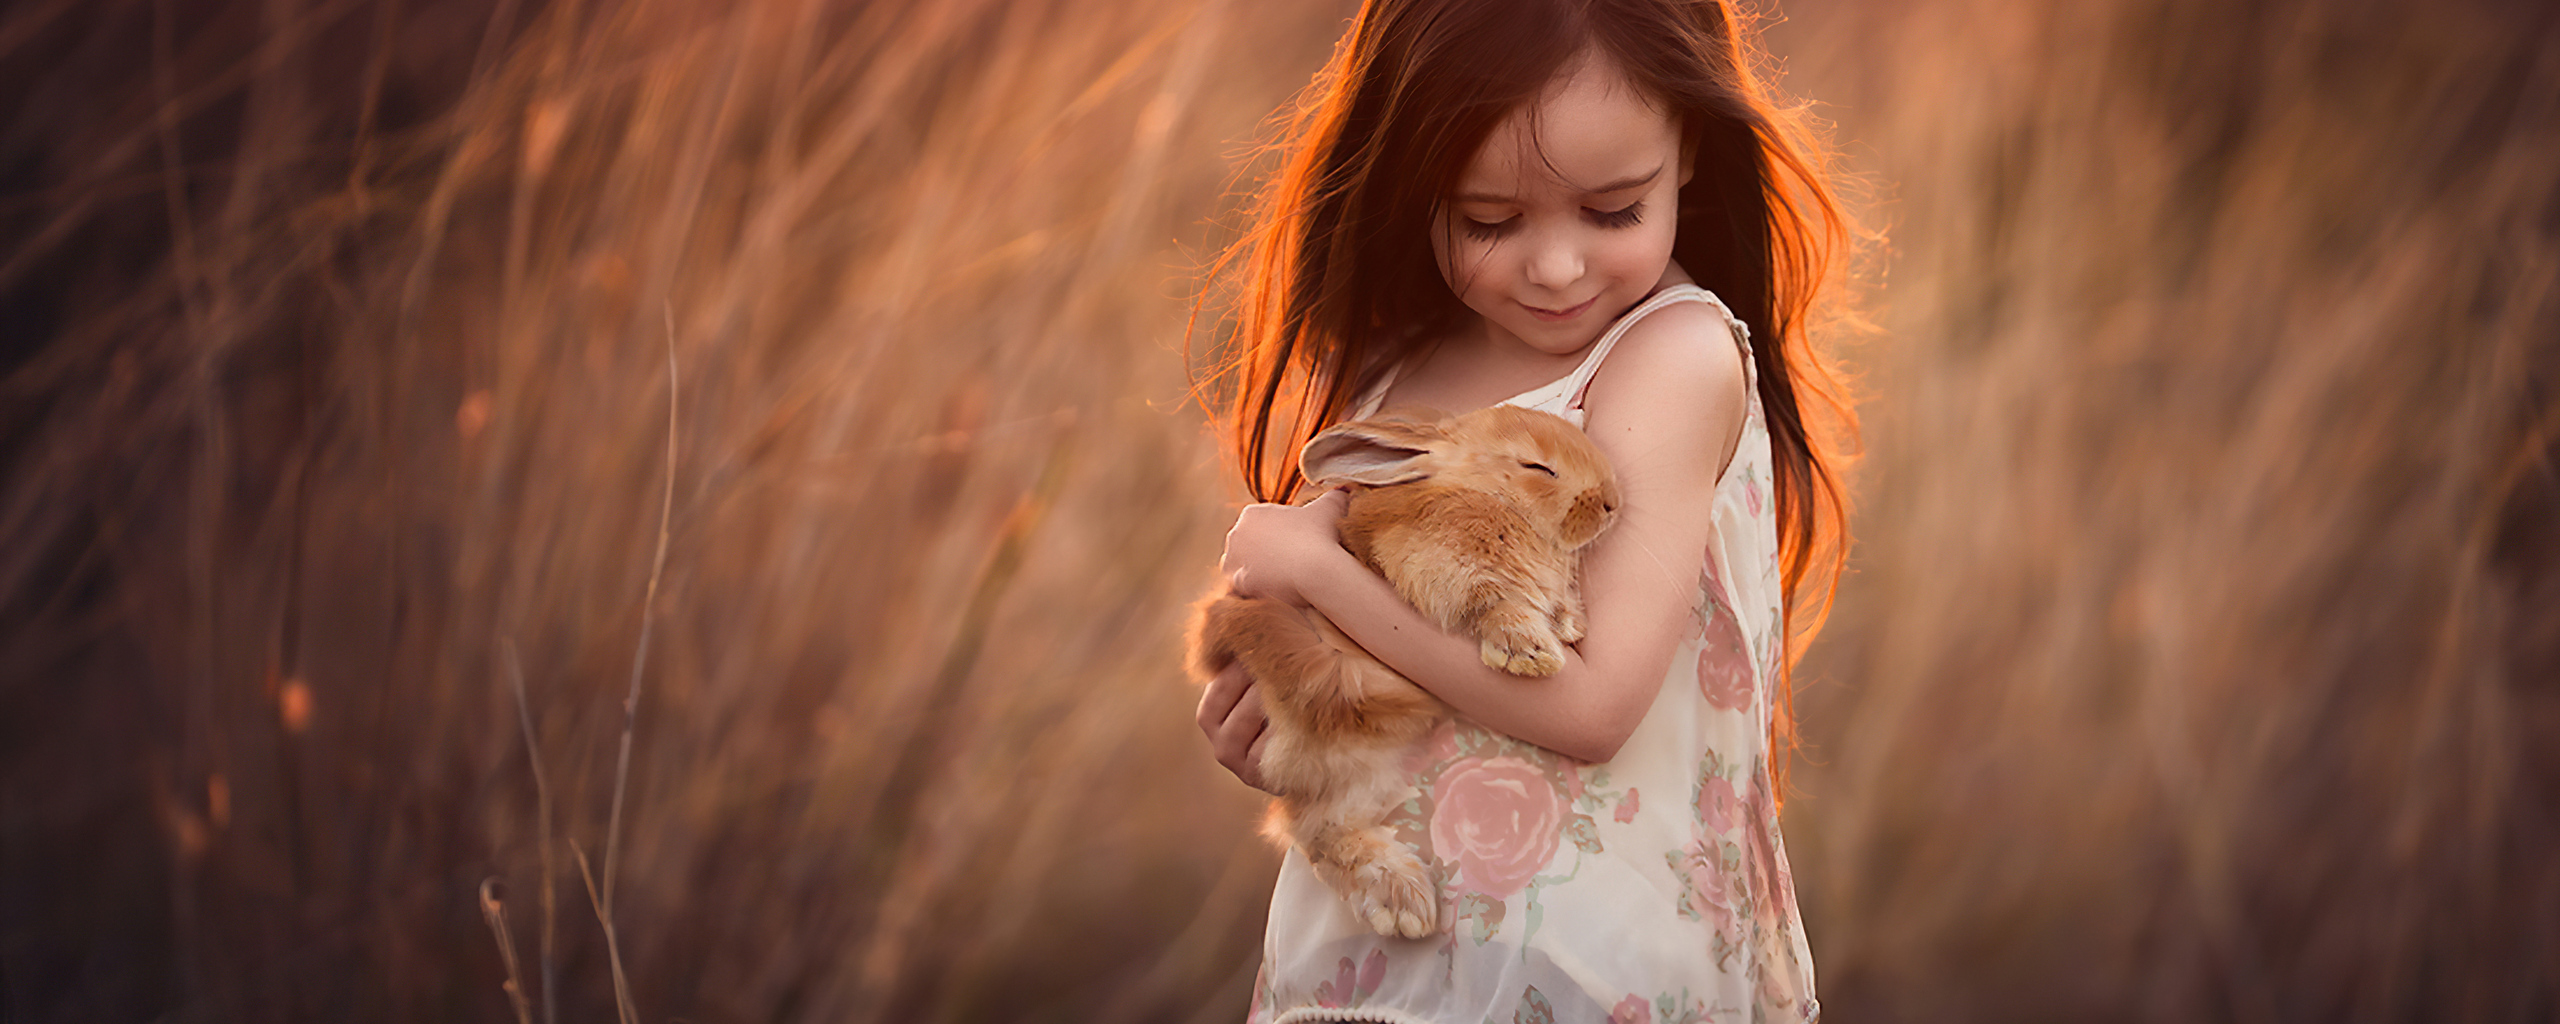 little-girl-with-rabbit-in-hands-4k-12.jpg